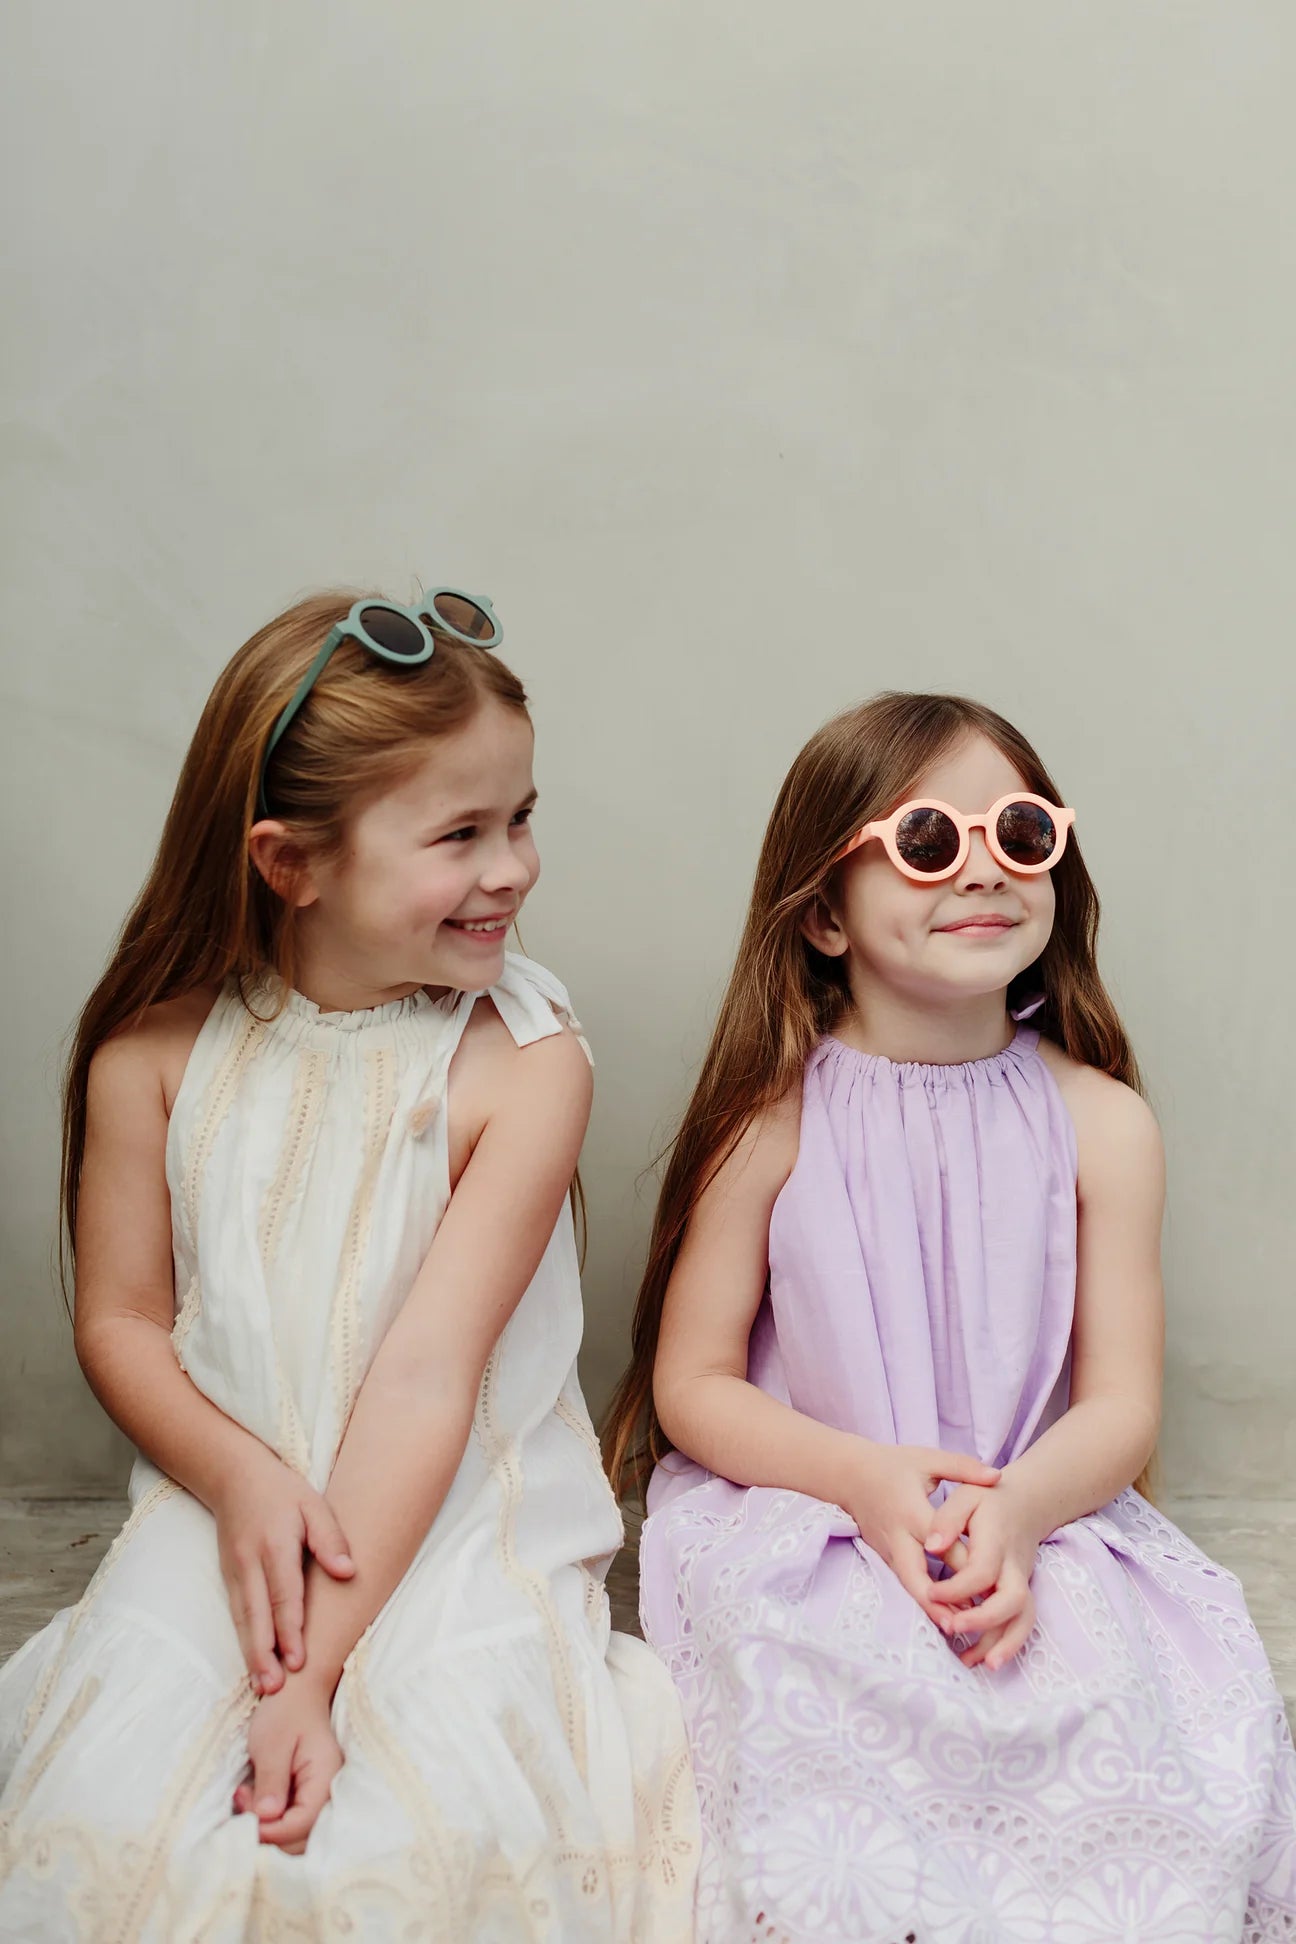 Little Drop - Kids Sunglasses